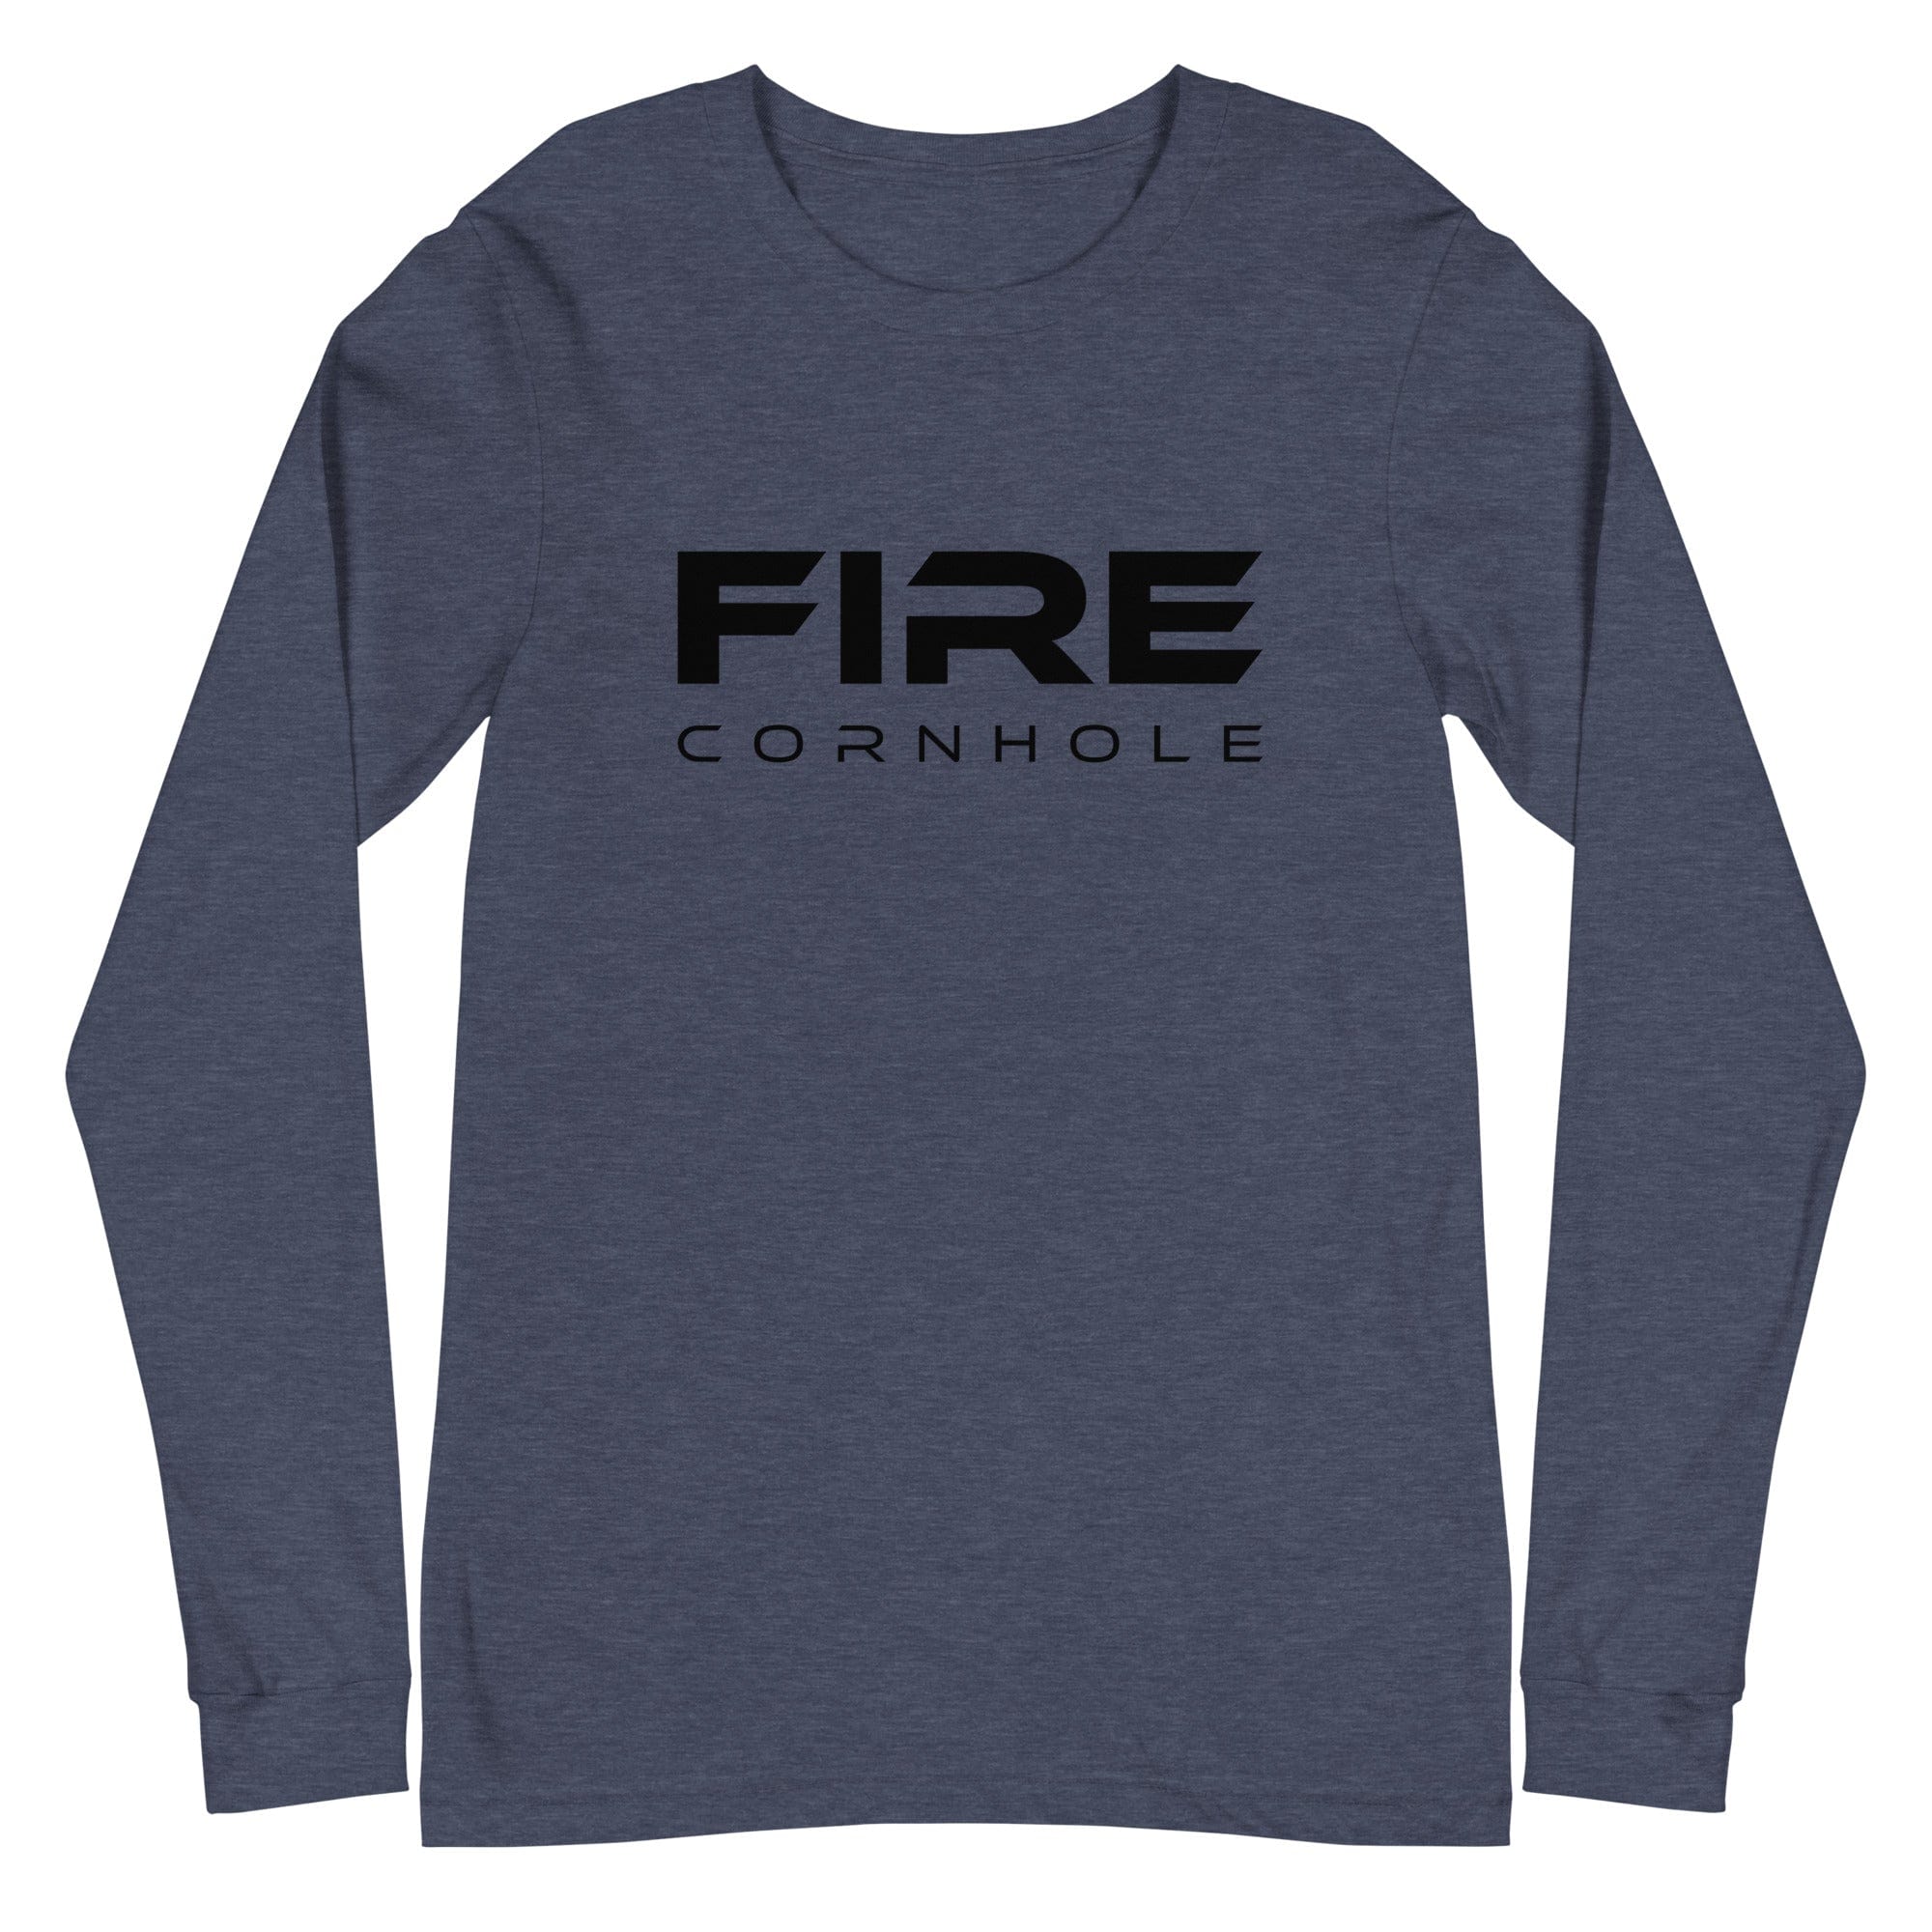 Heathered navy unisex cotton longsleeve shirt with Fire Cornhole logo in black